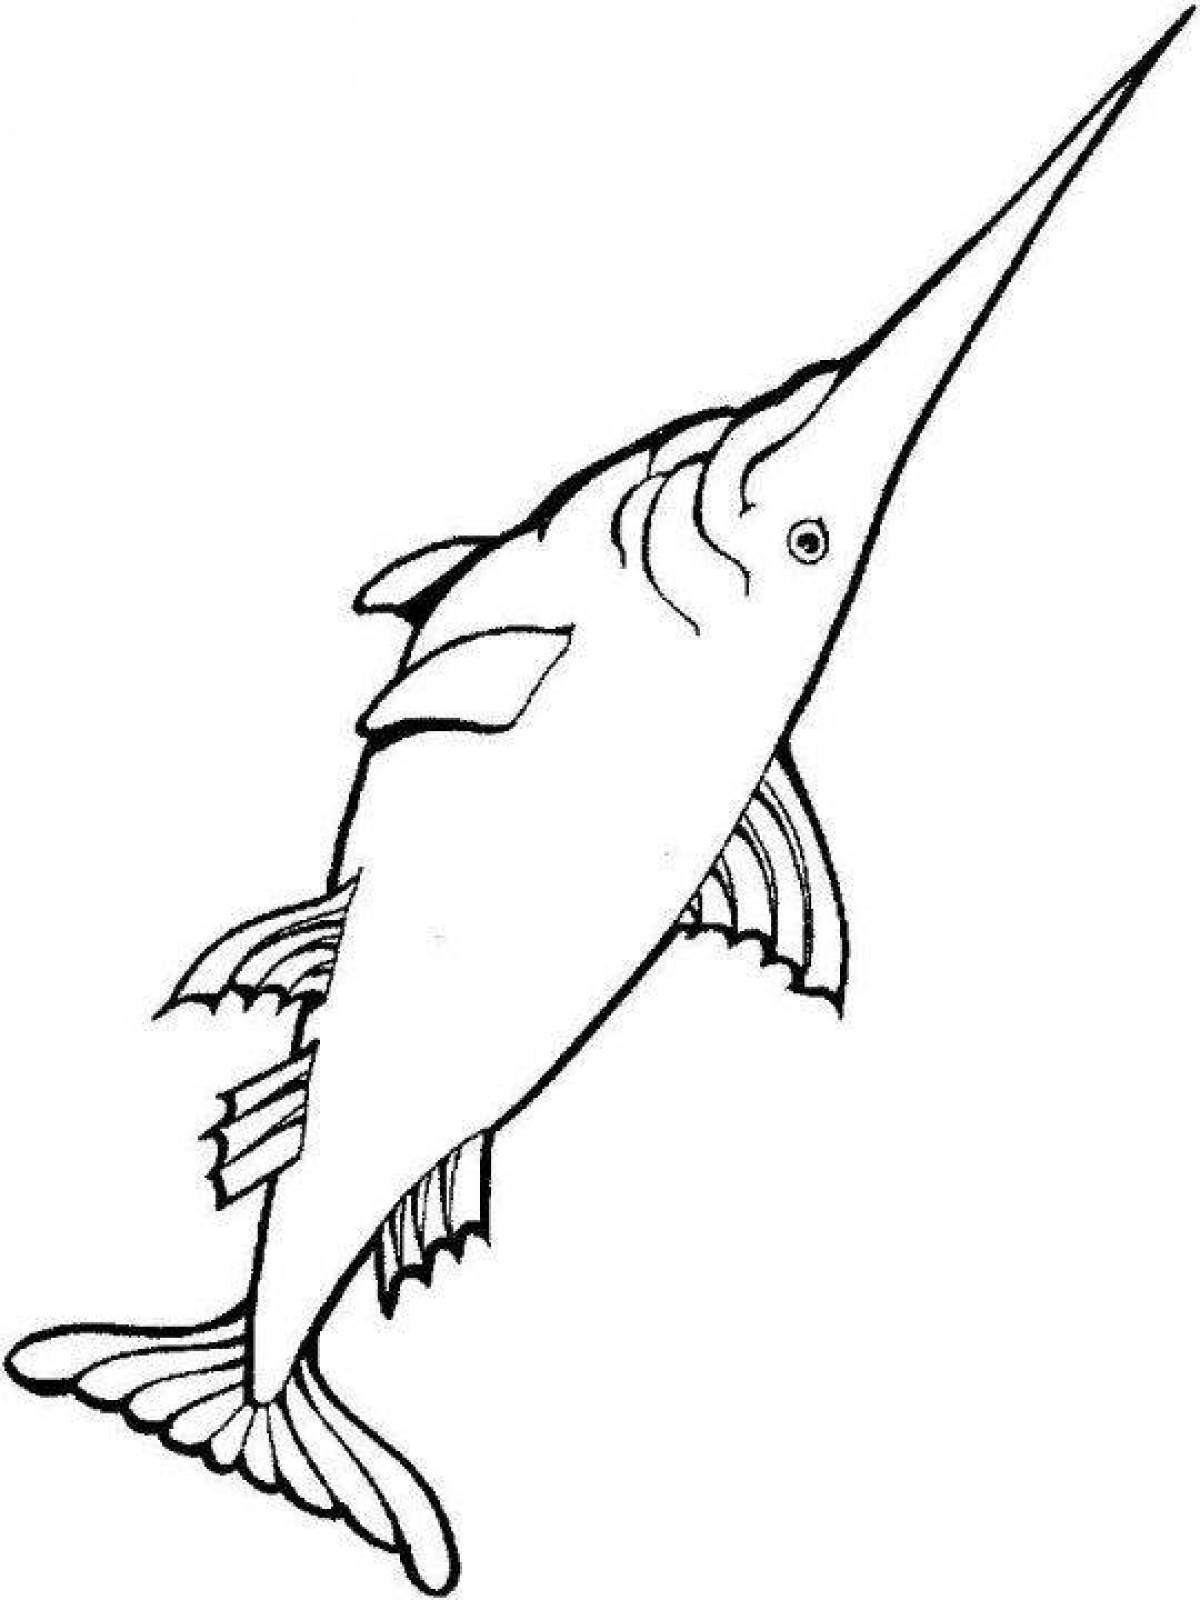 Creative sawfish coloring page